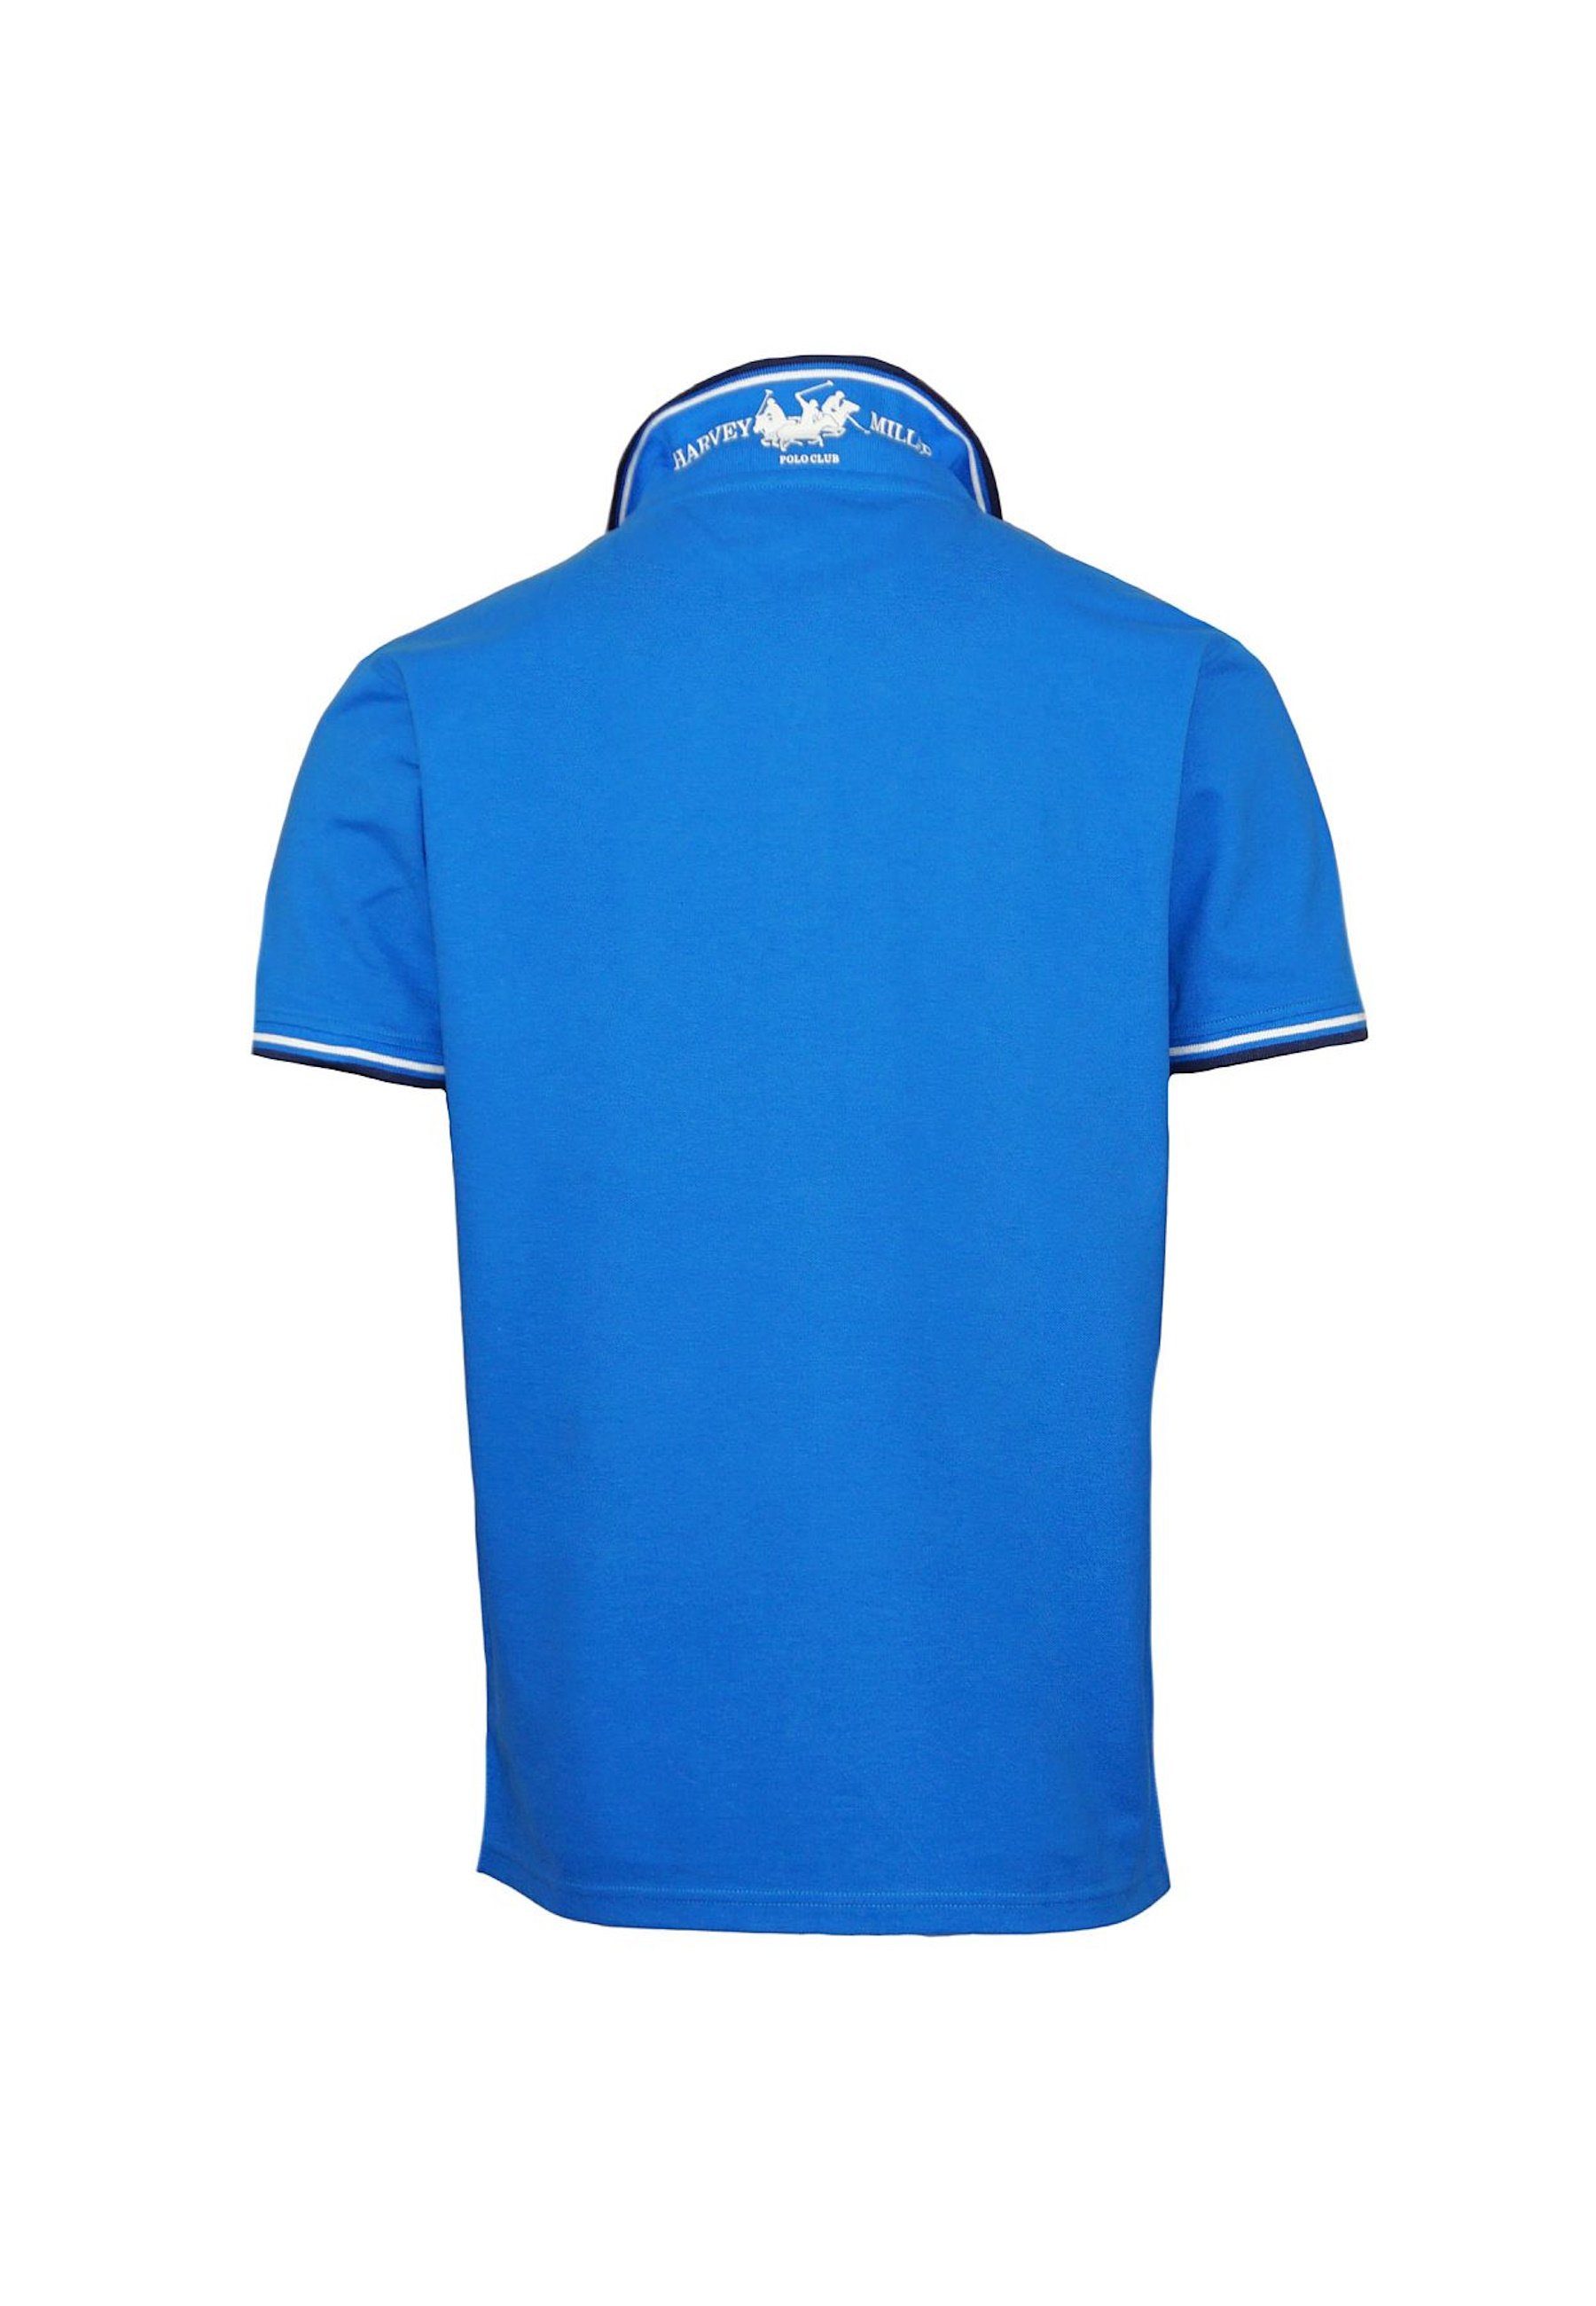 Harvey Miller Poloshirt Fashion Polo blau Shirt Kurzarm Polohemd Poloshirt